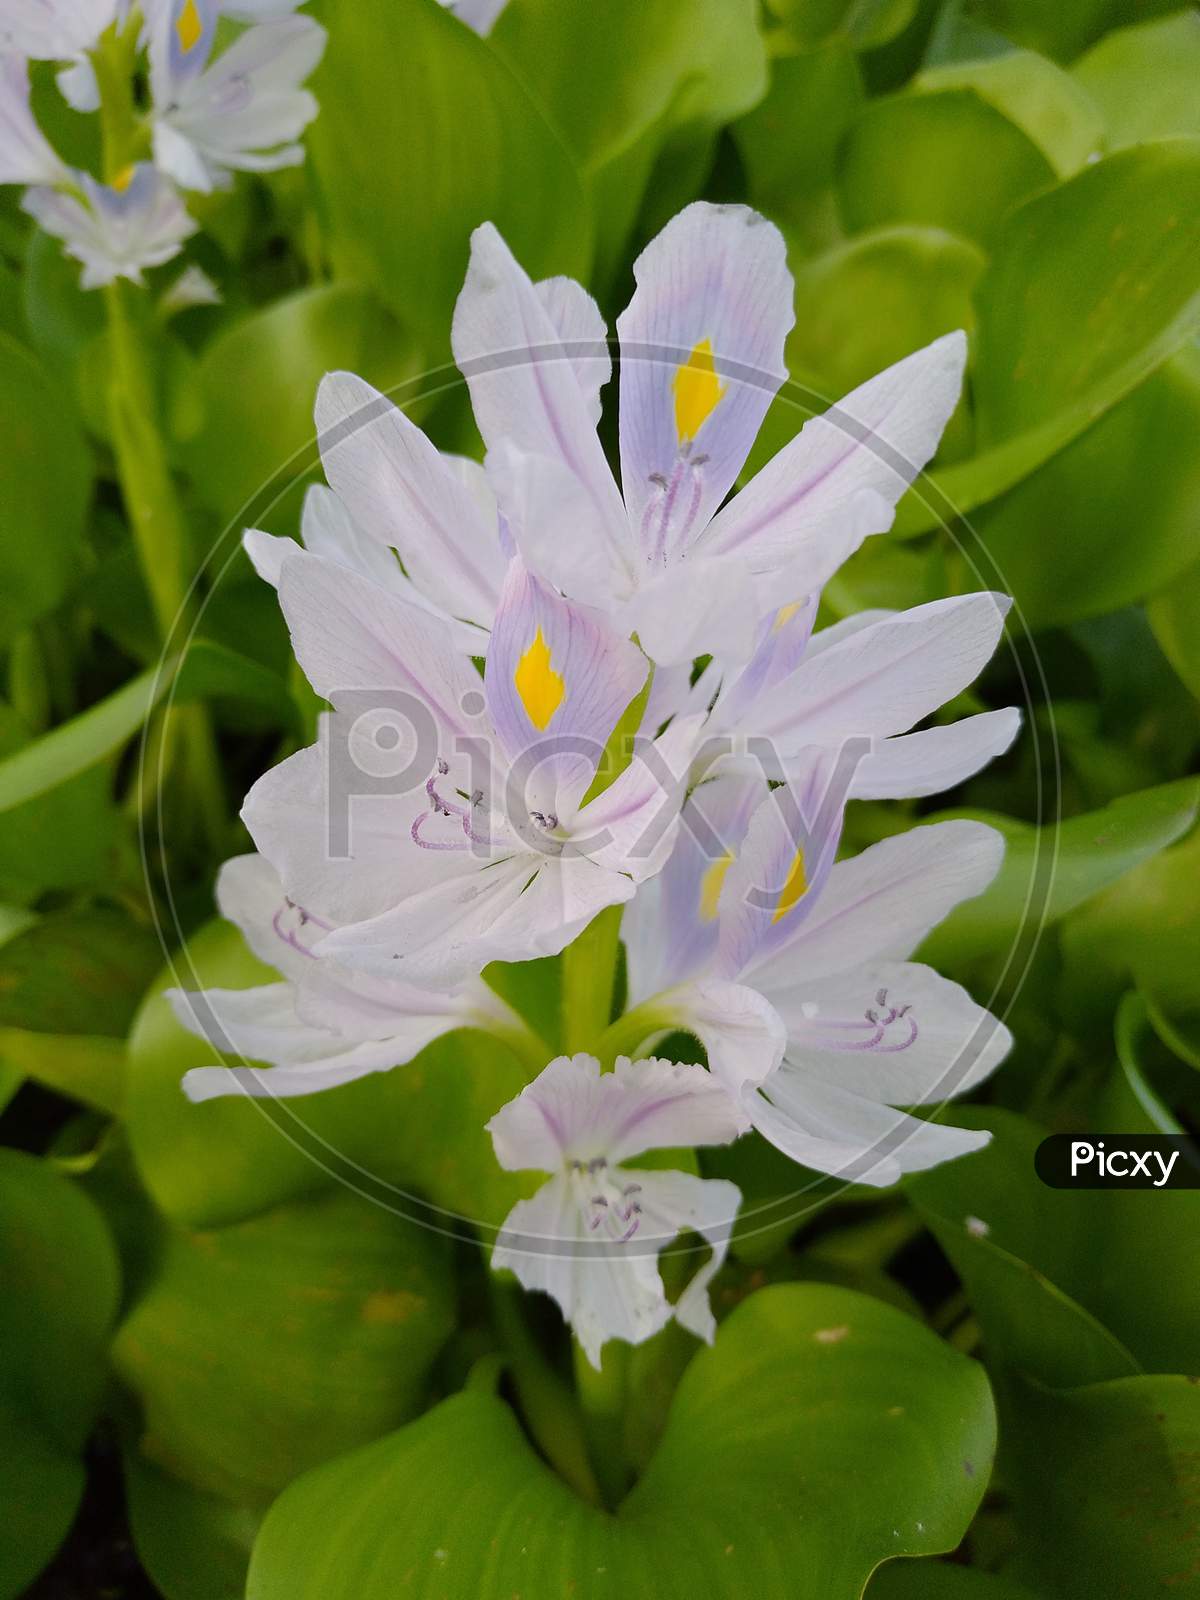 Water hyacinth flower image